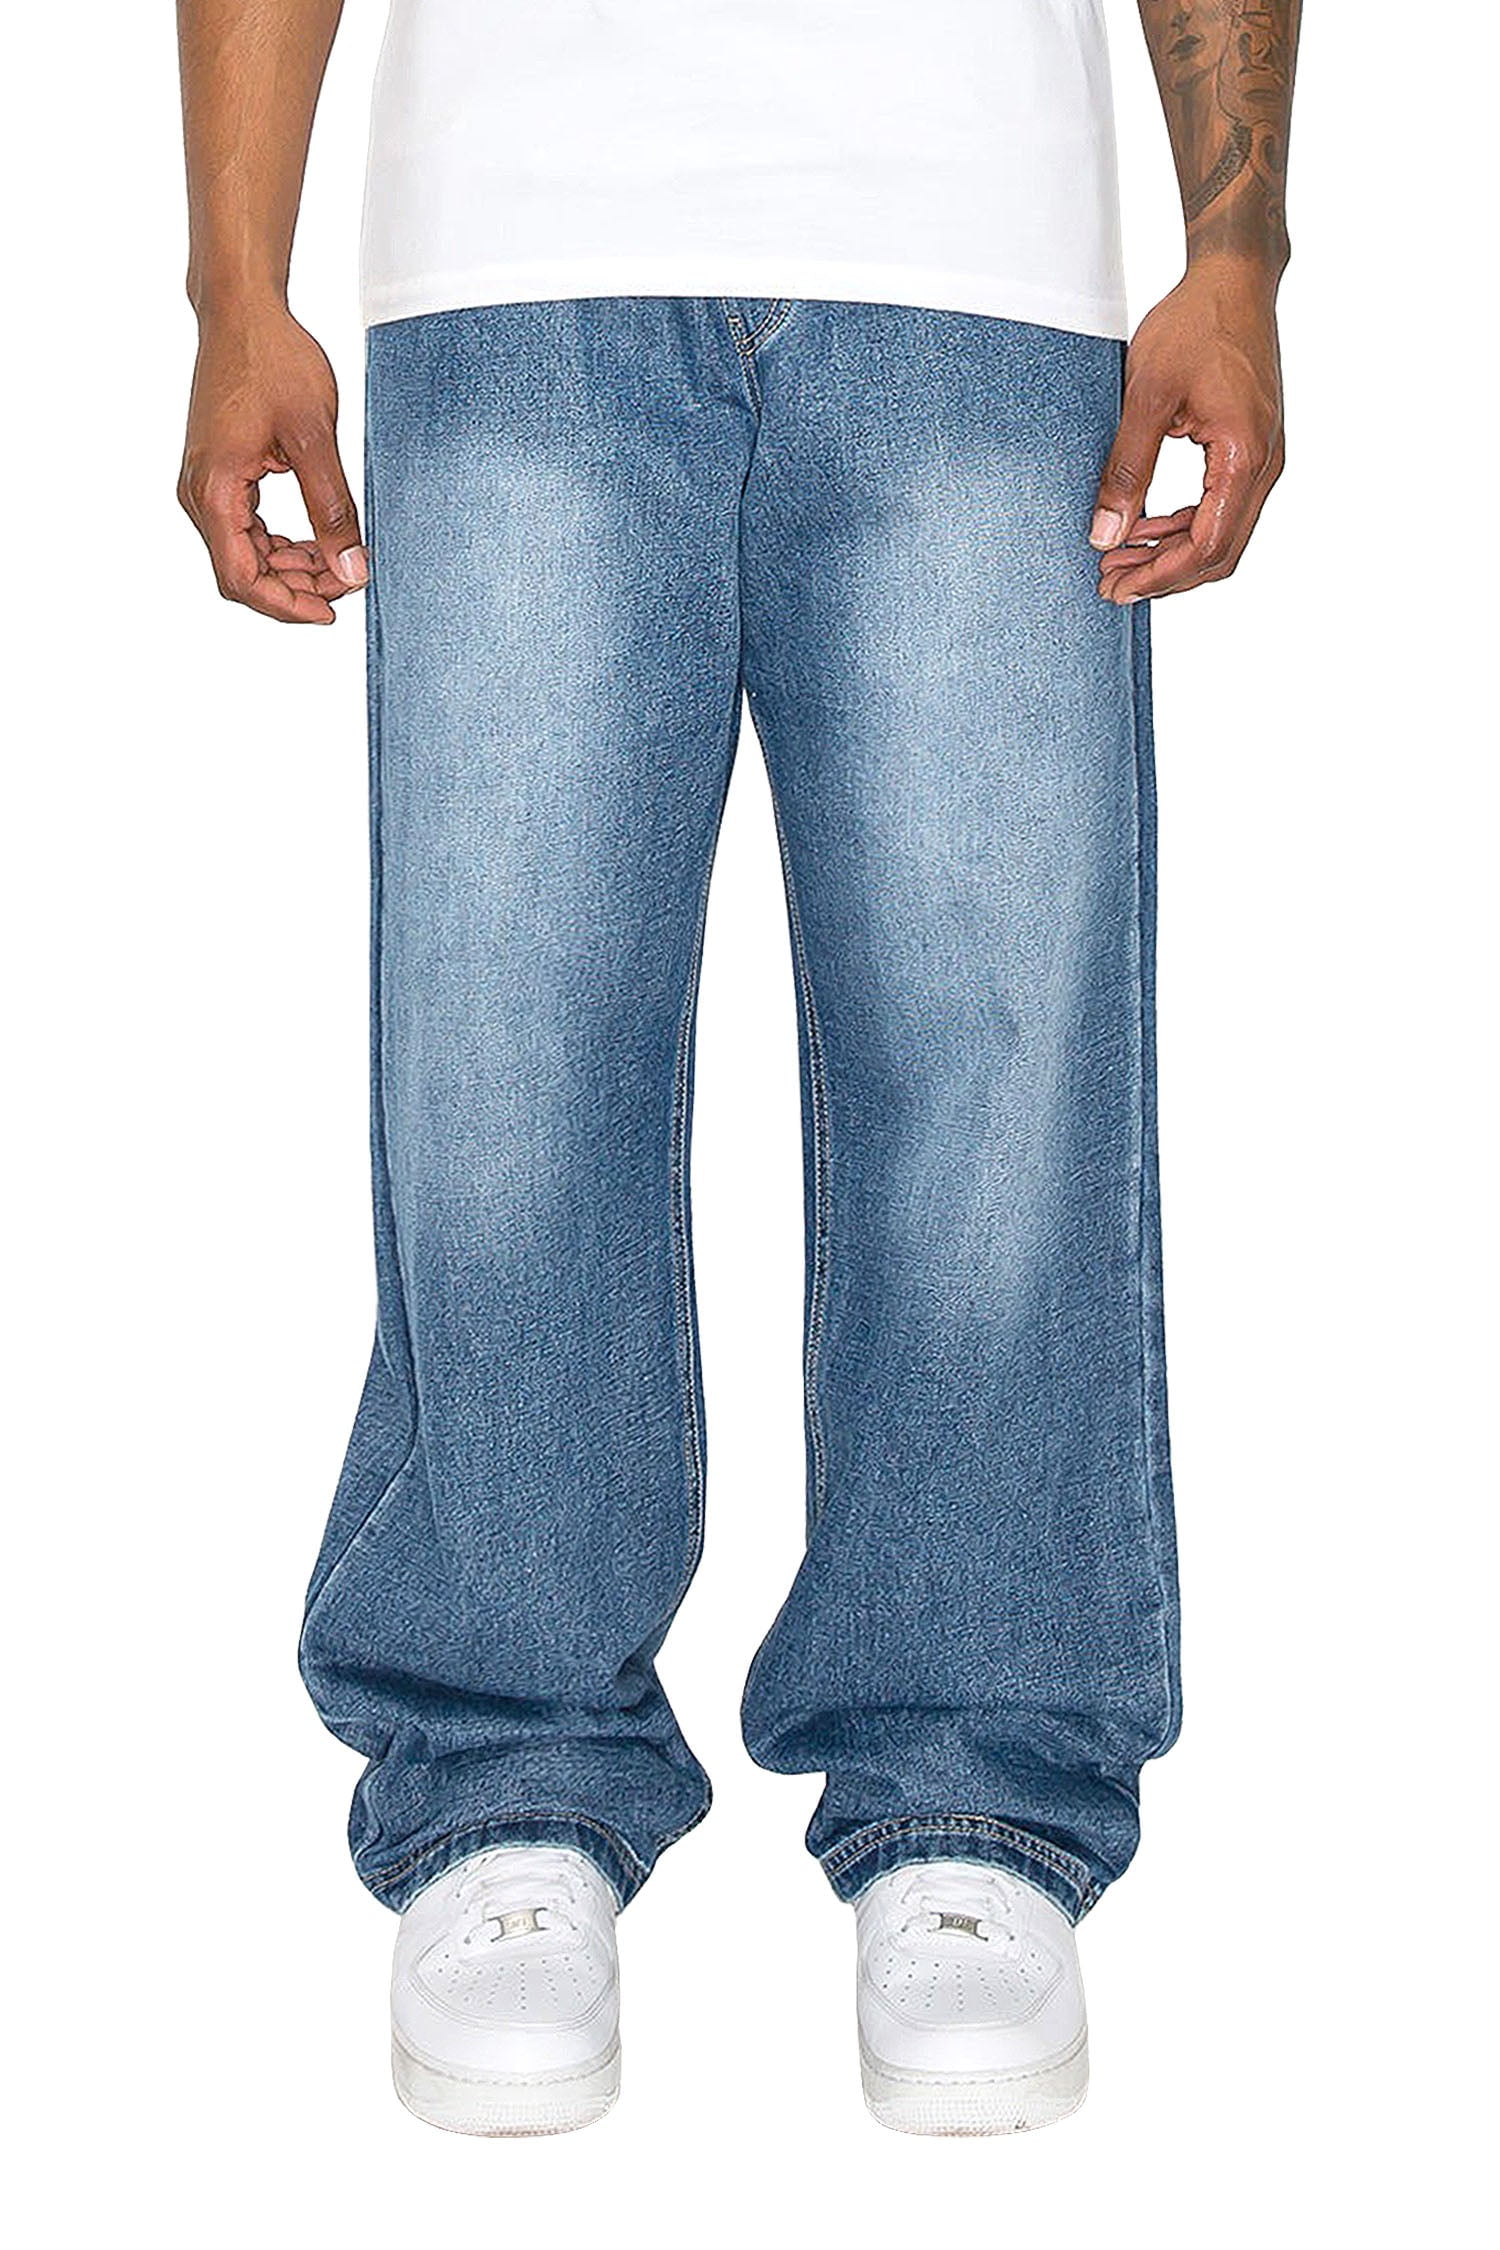 Victorious Paint Splatter Rhinestone Denim Jeans Indigo / 34 / 33